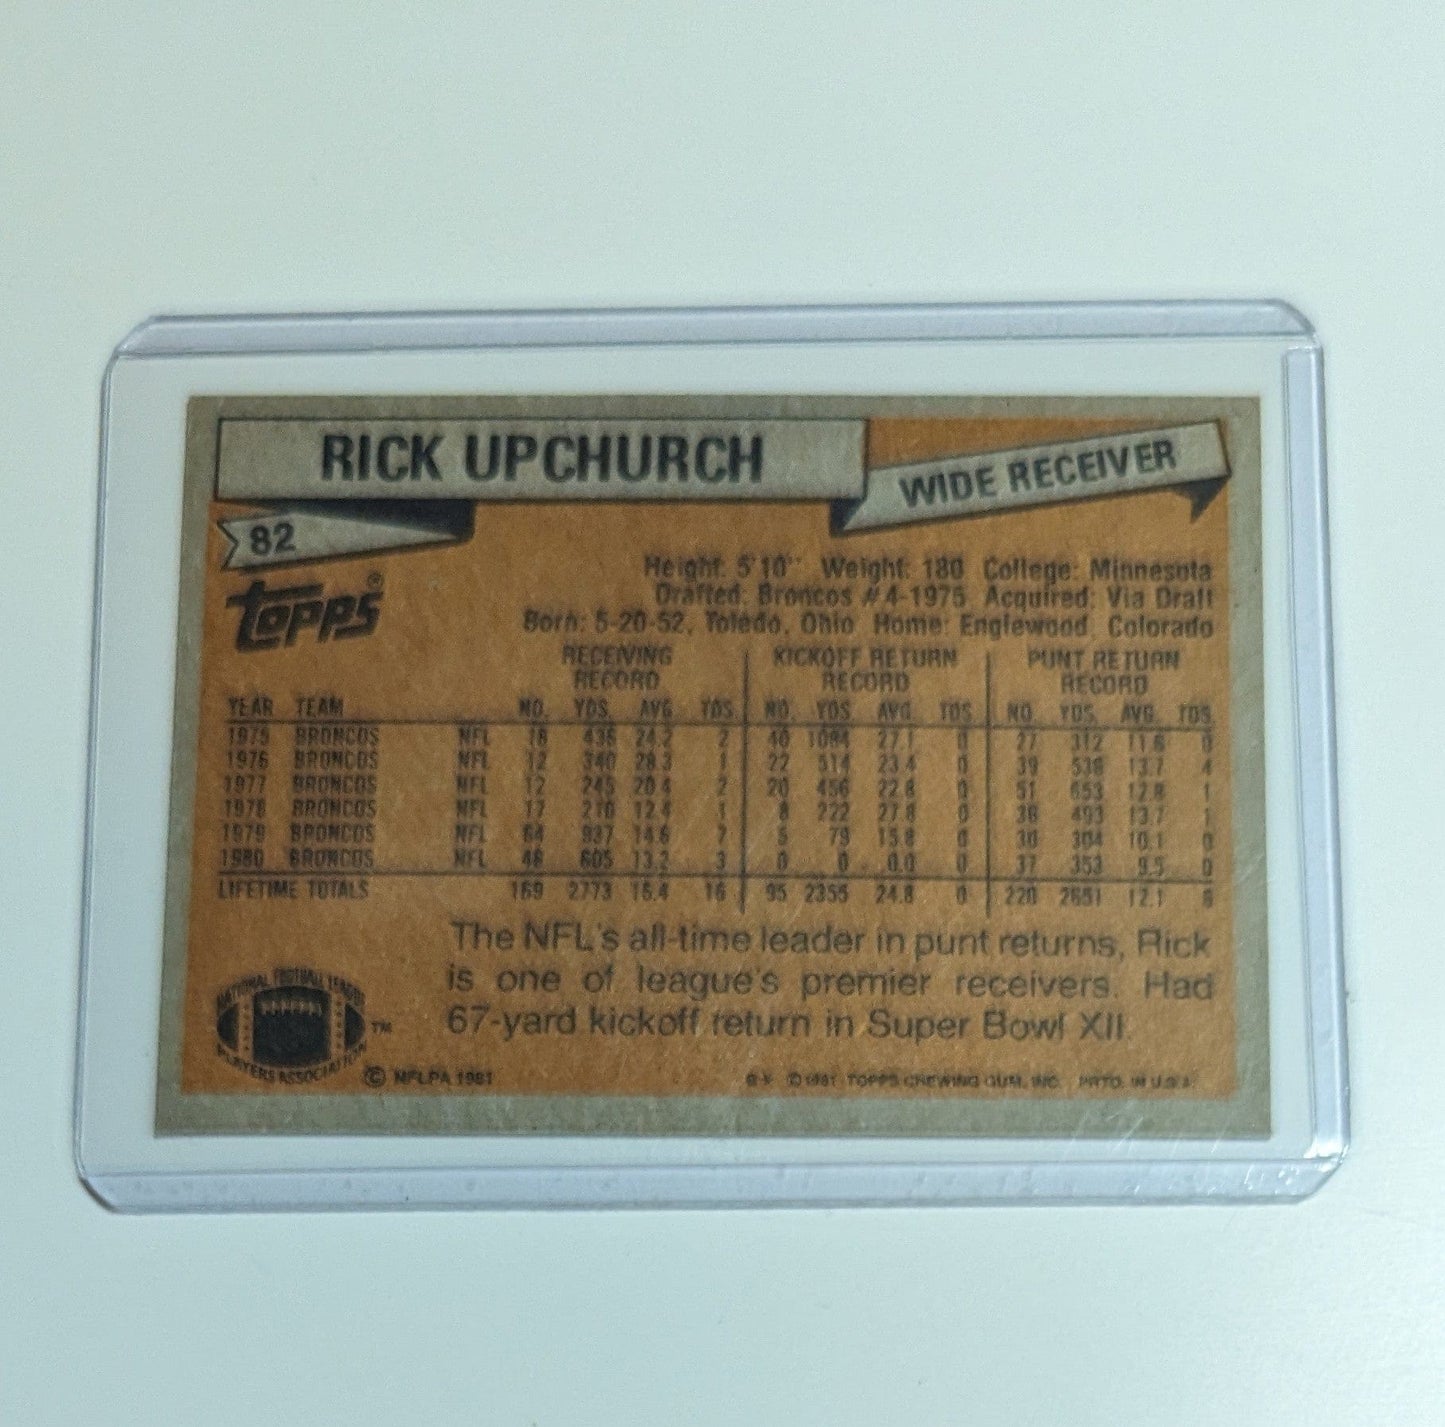 FIINR Football Card 1981 Topps Rick Upchurch Football Card #82 - Mint Condition